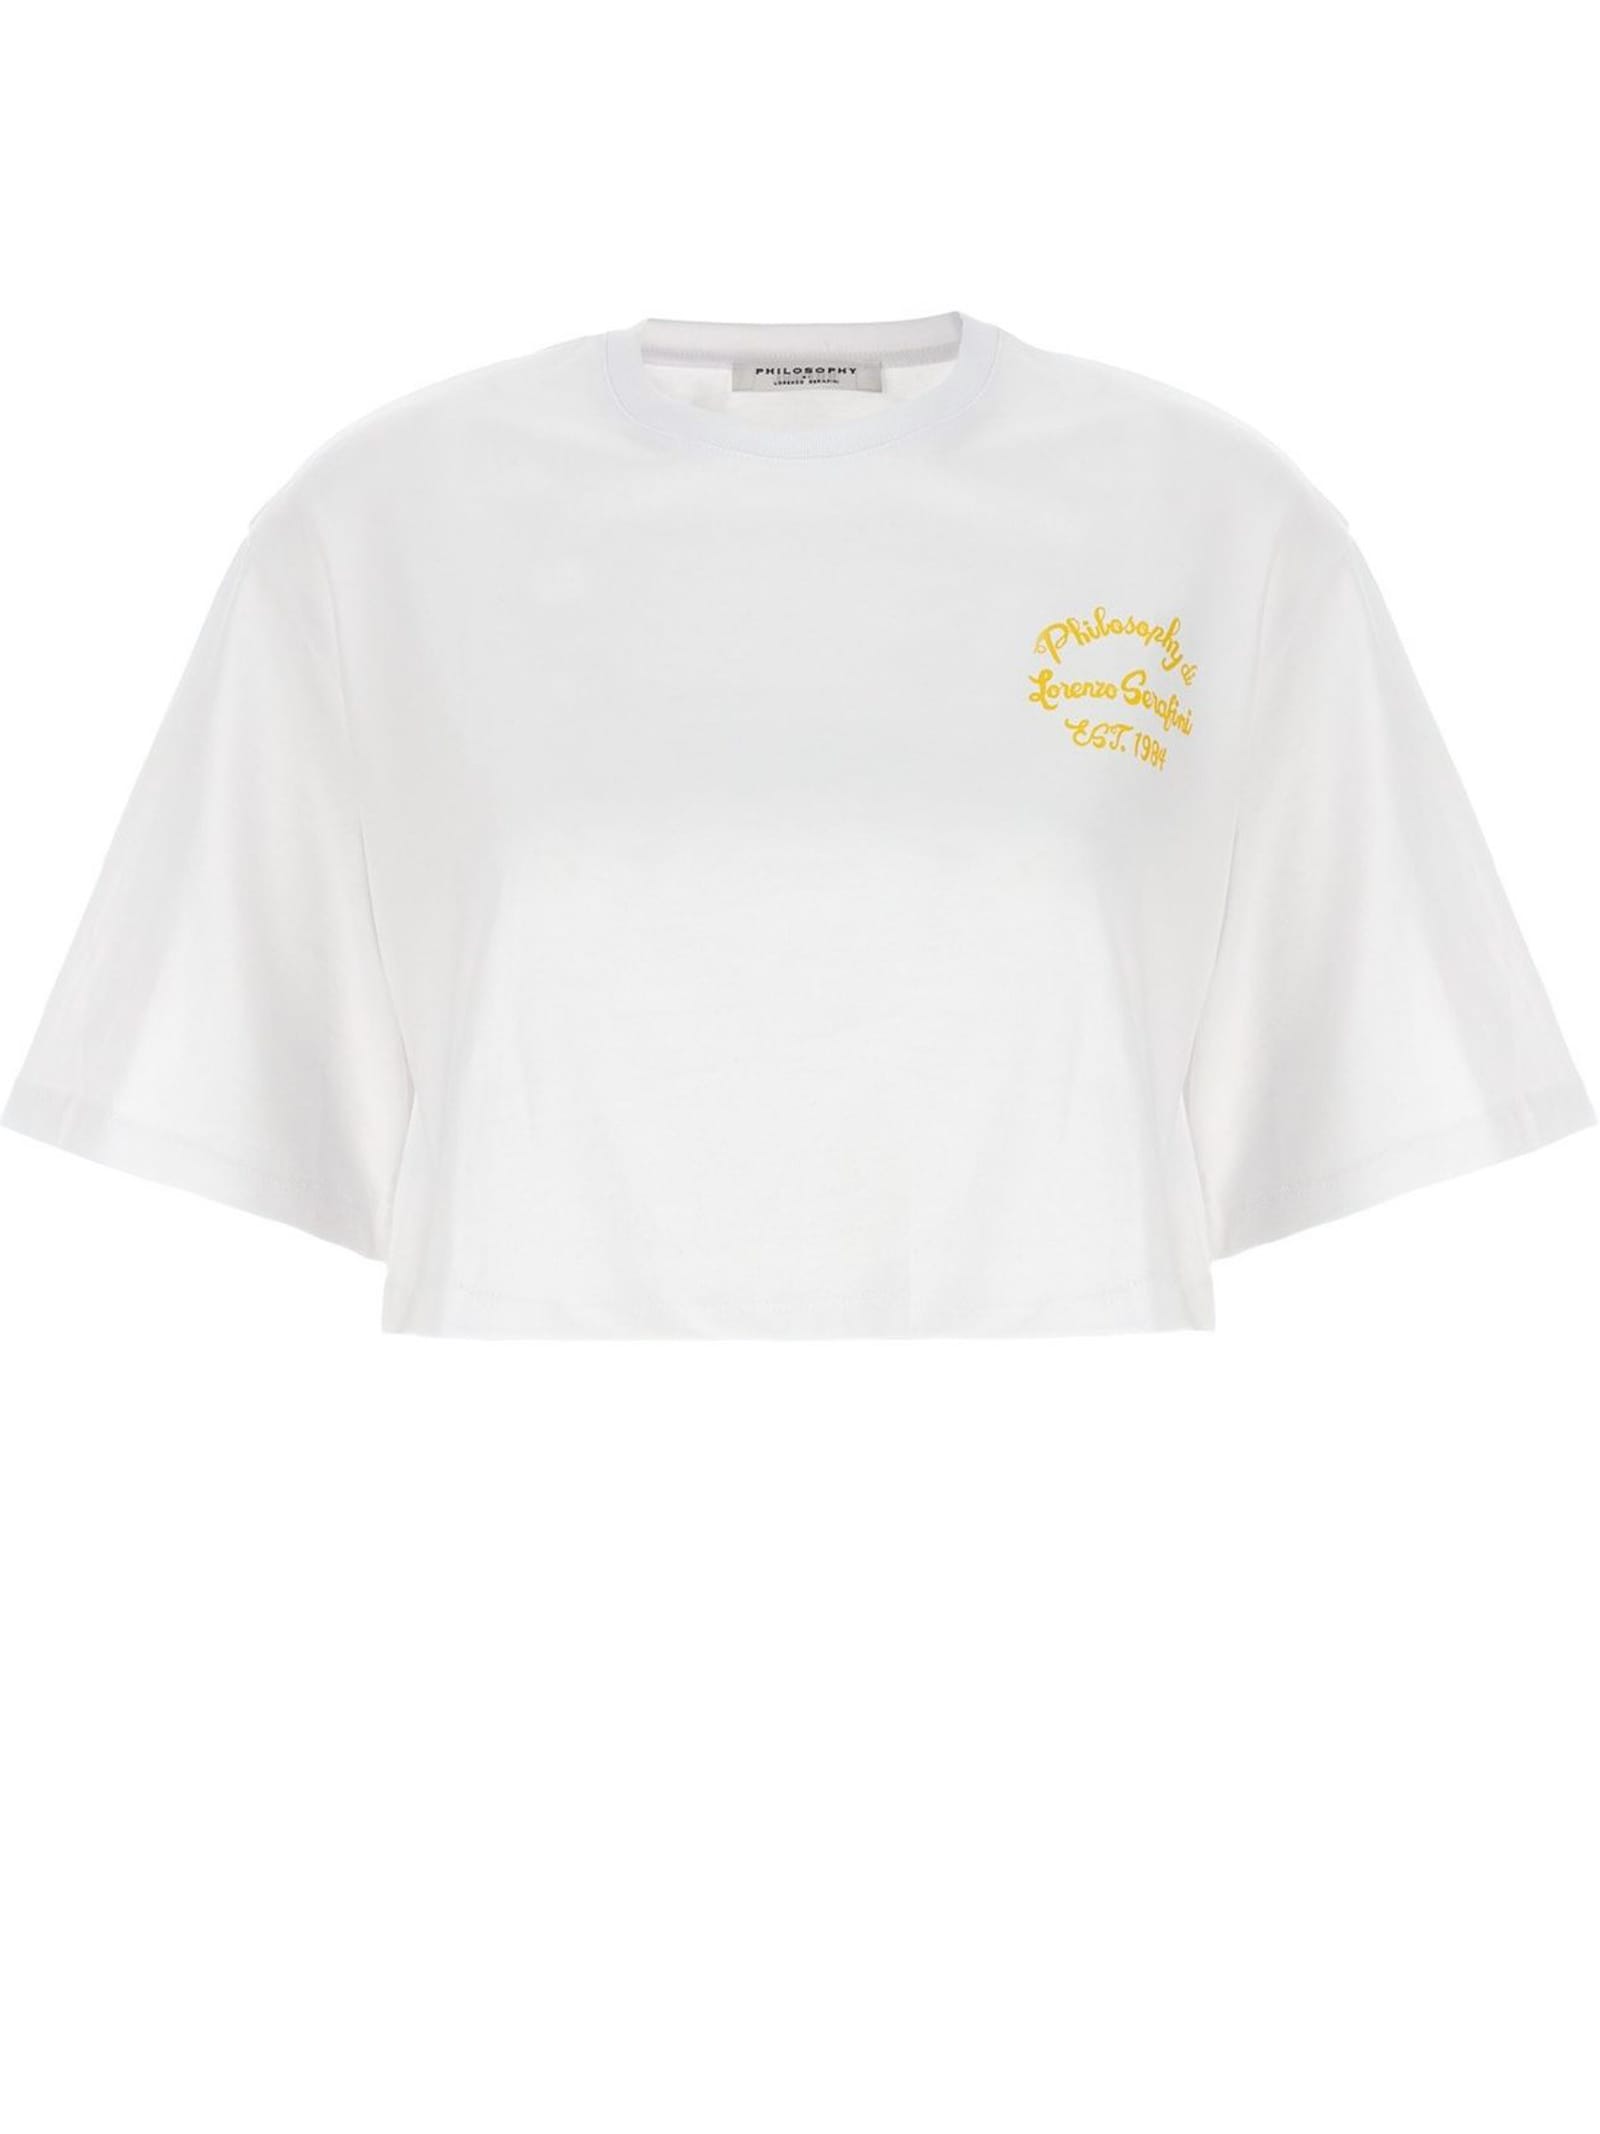 White And Yellow Cotton T-shirt